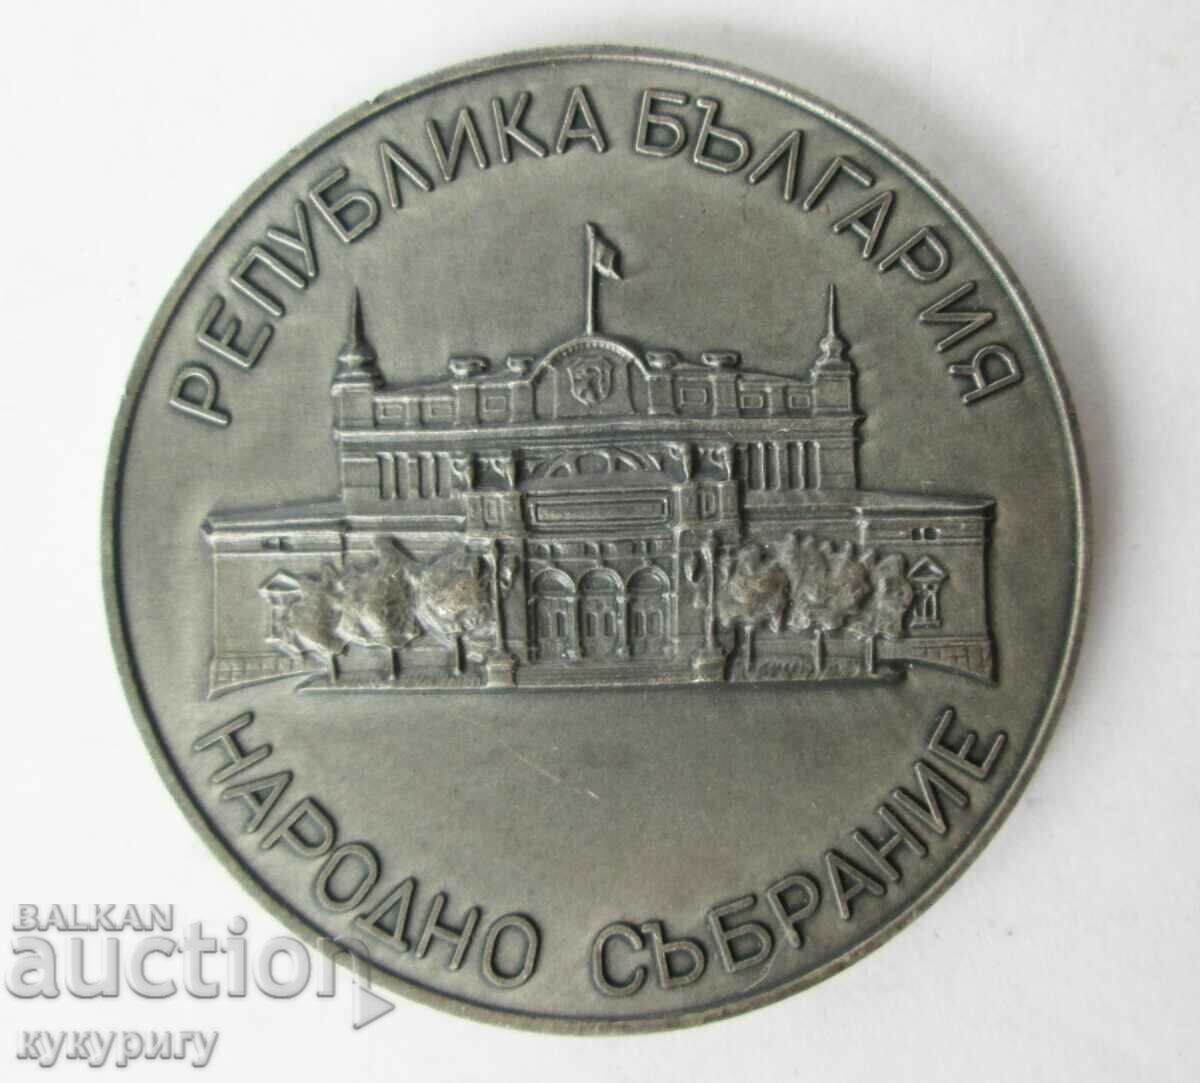 Rare medal plaque National Assembly deputy award